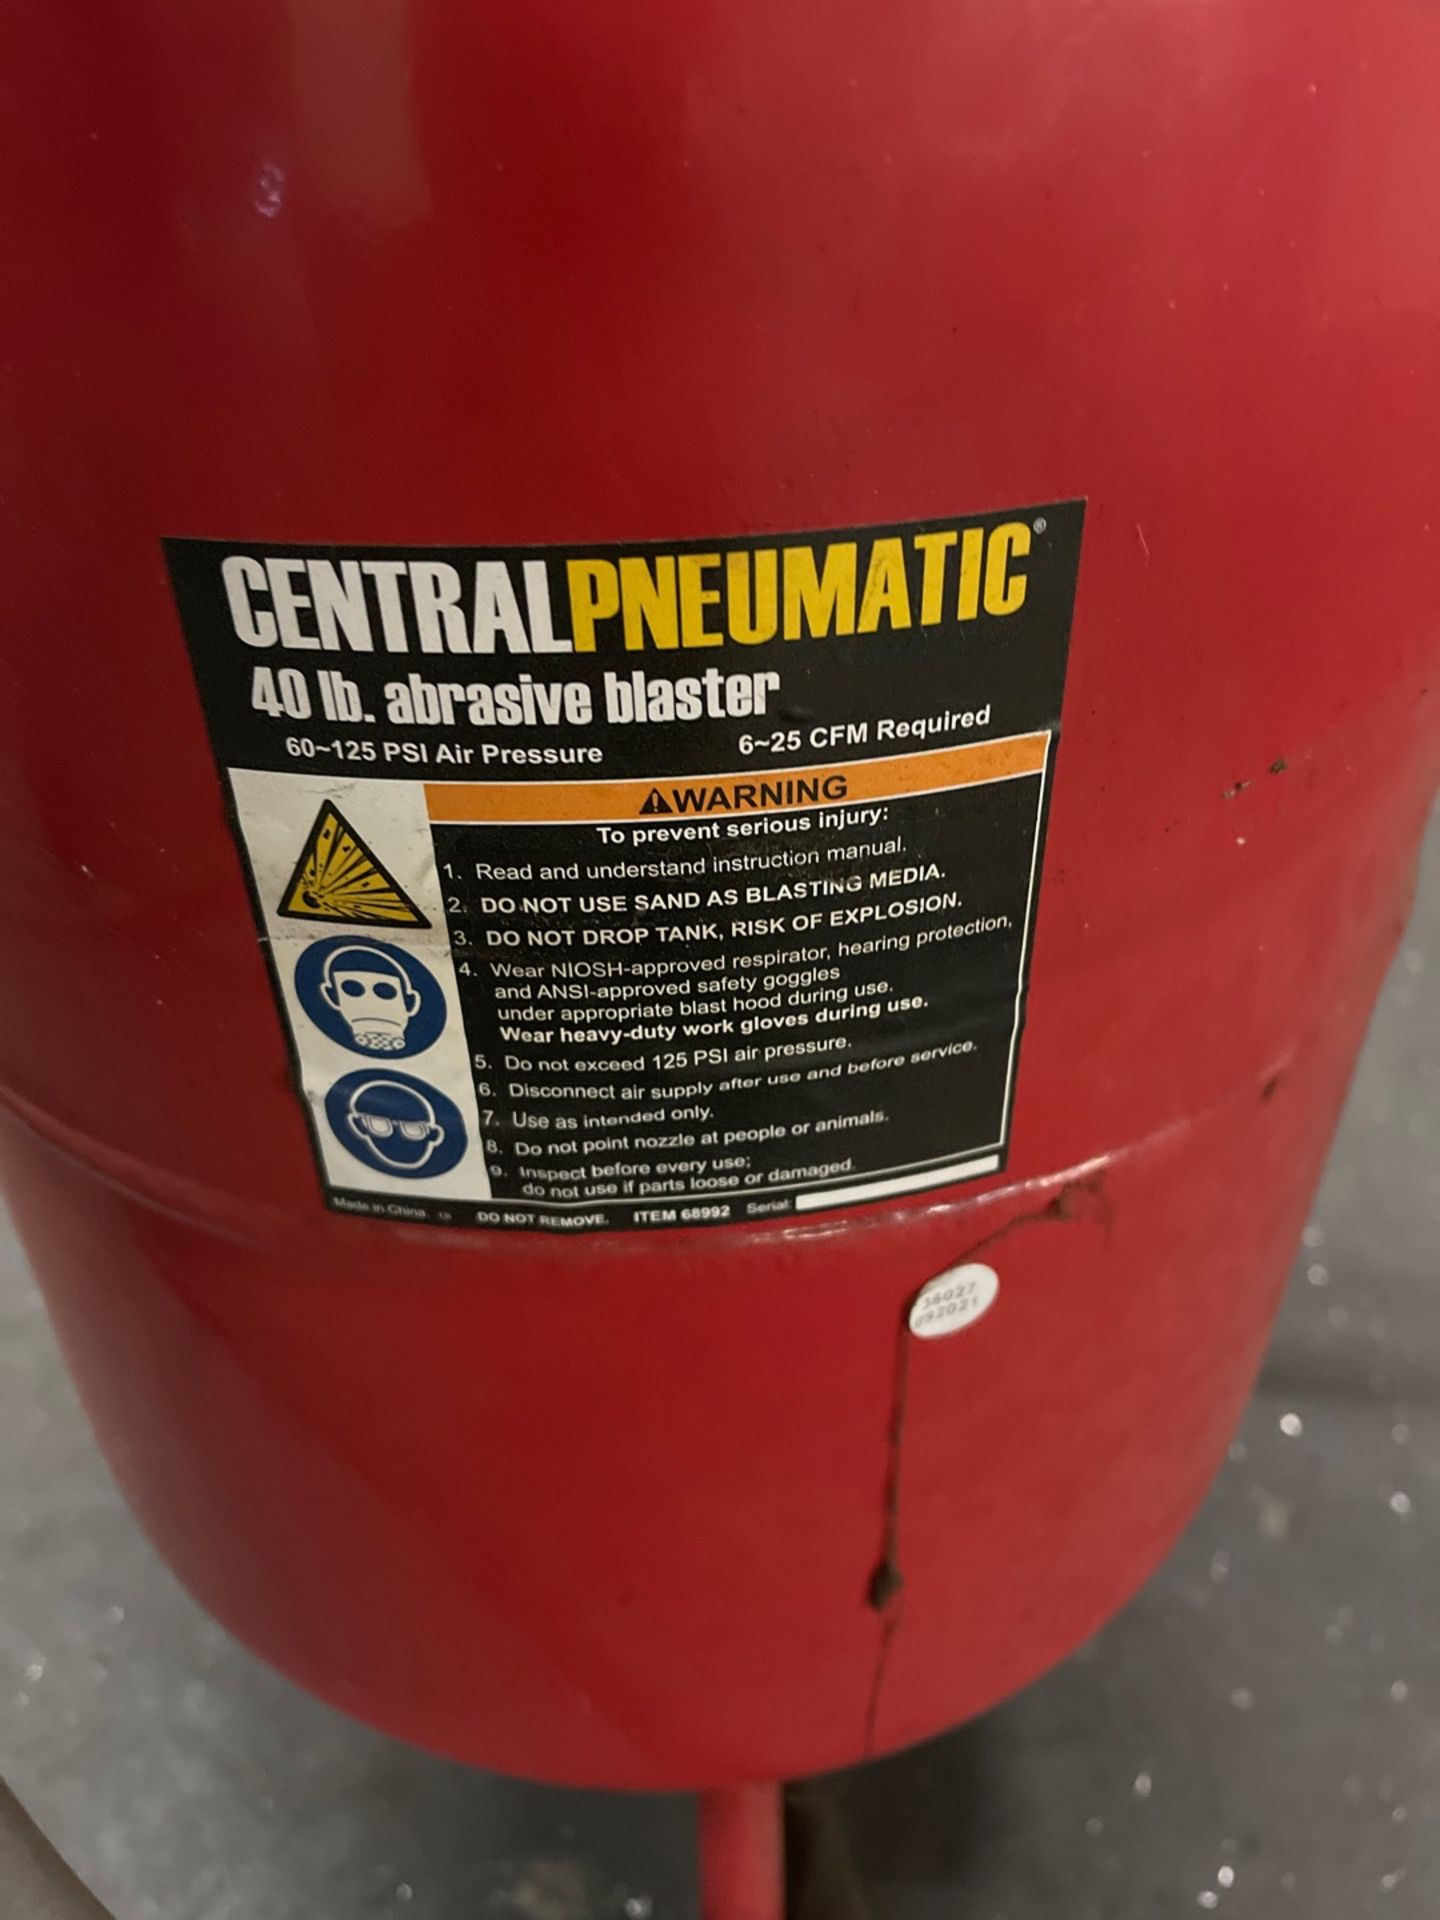 Central Pneumatic Abrasive Blaster - Image 2 of 2